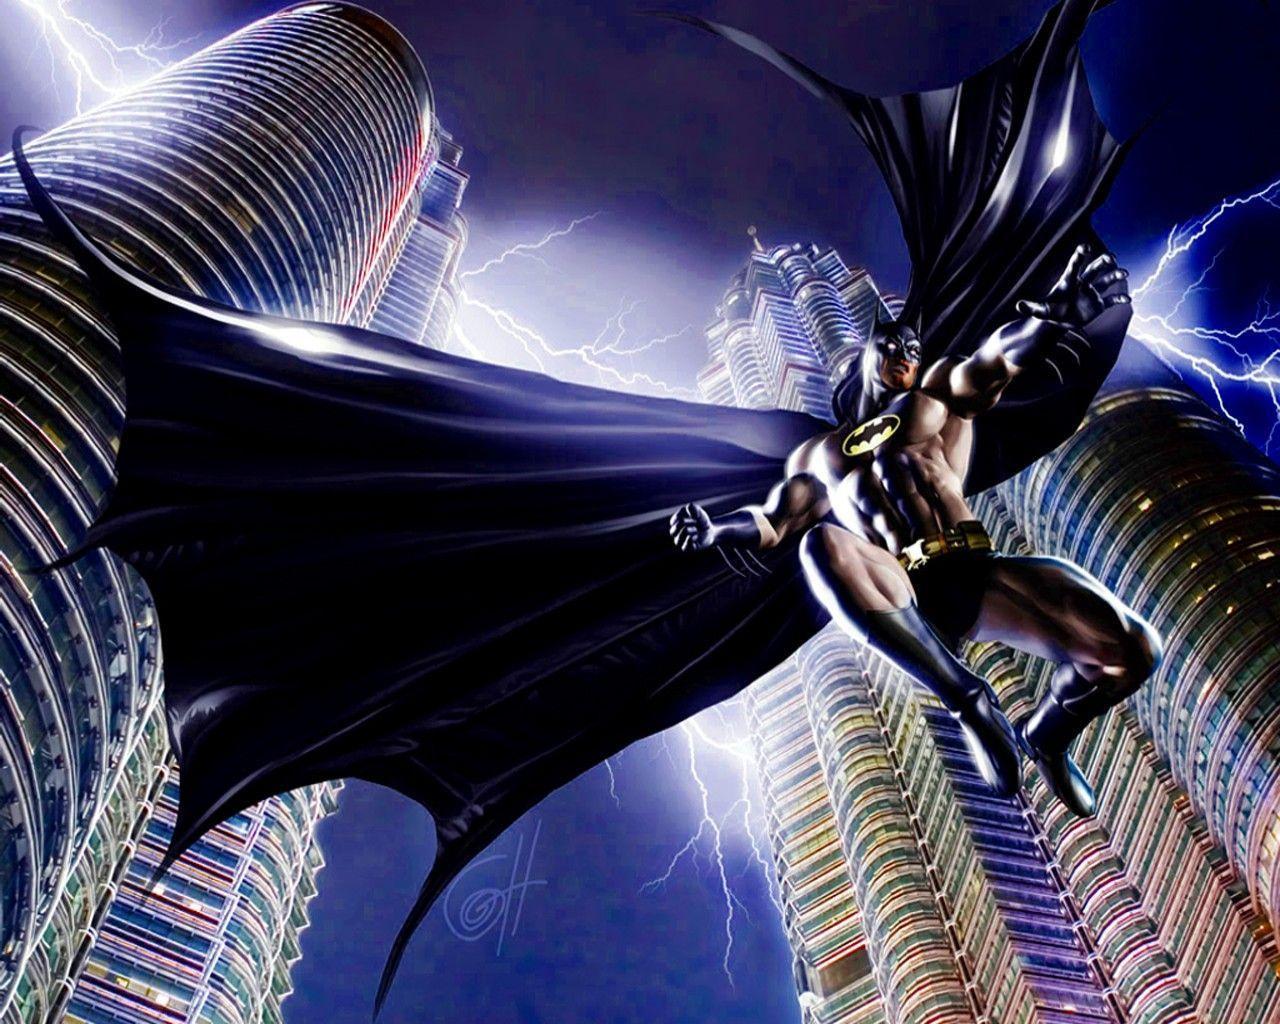 image For > Cool Batman Wallpaper